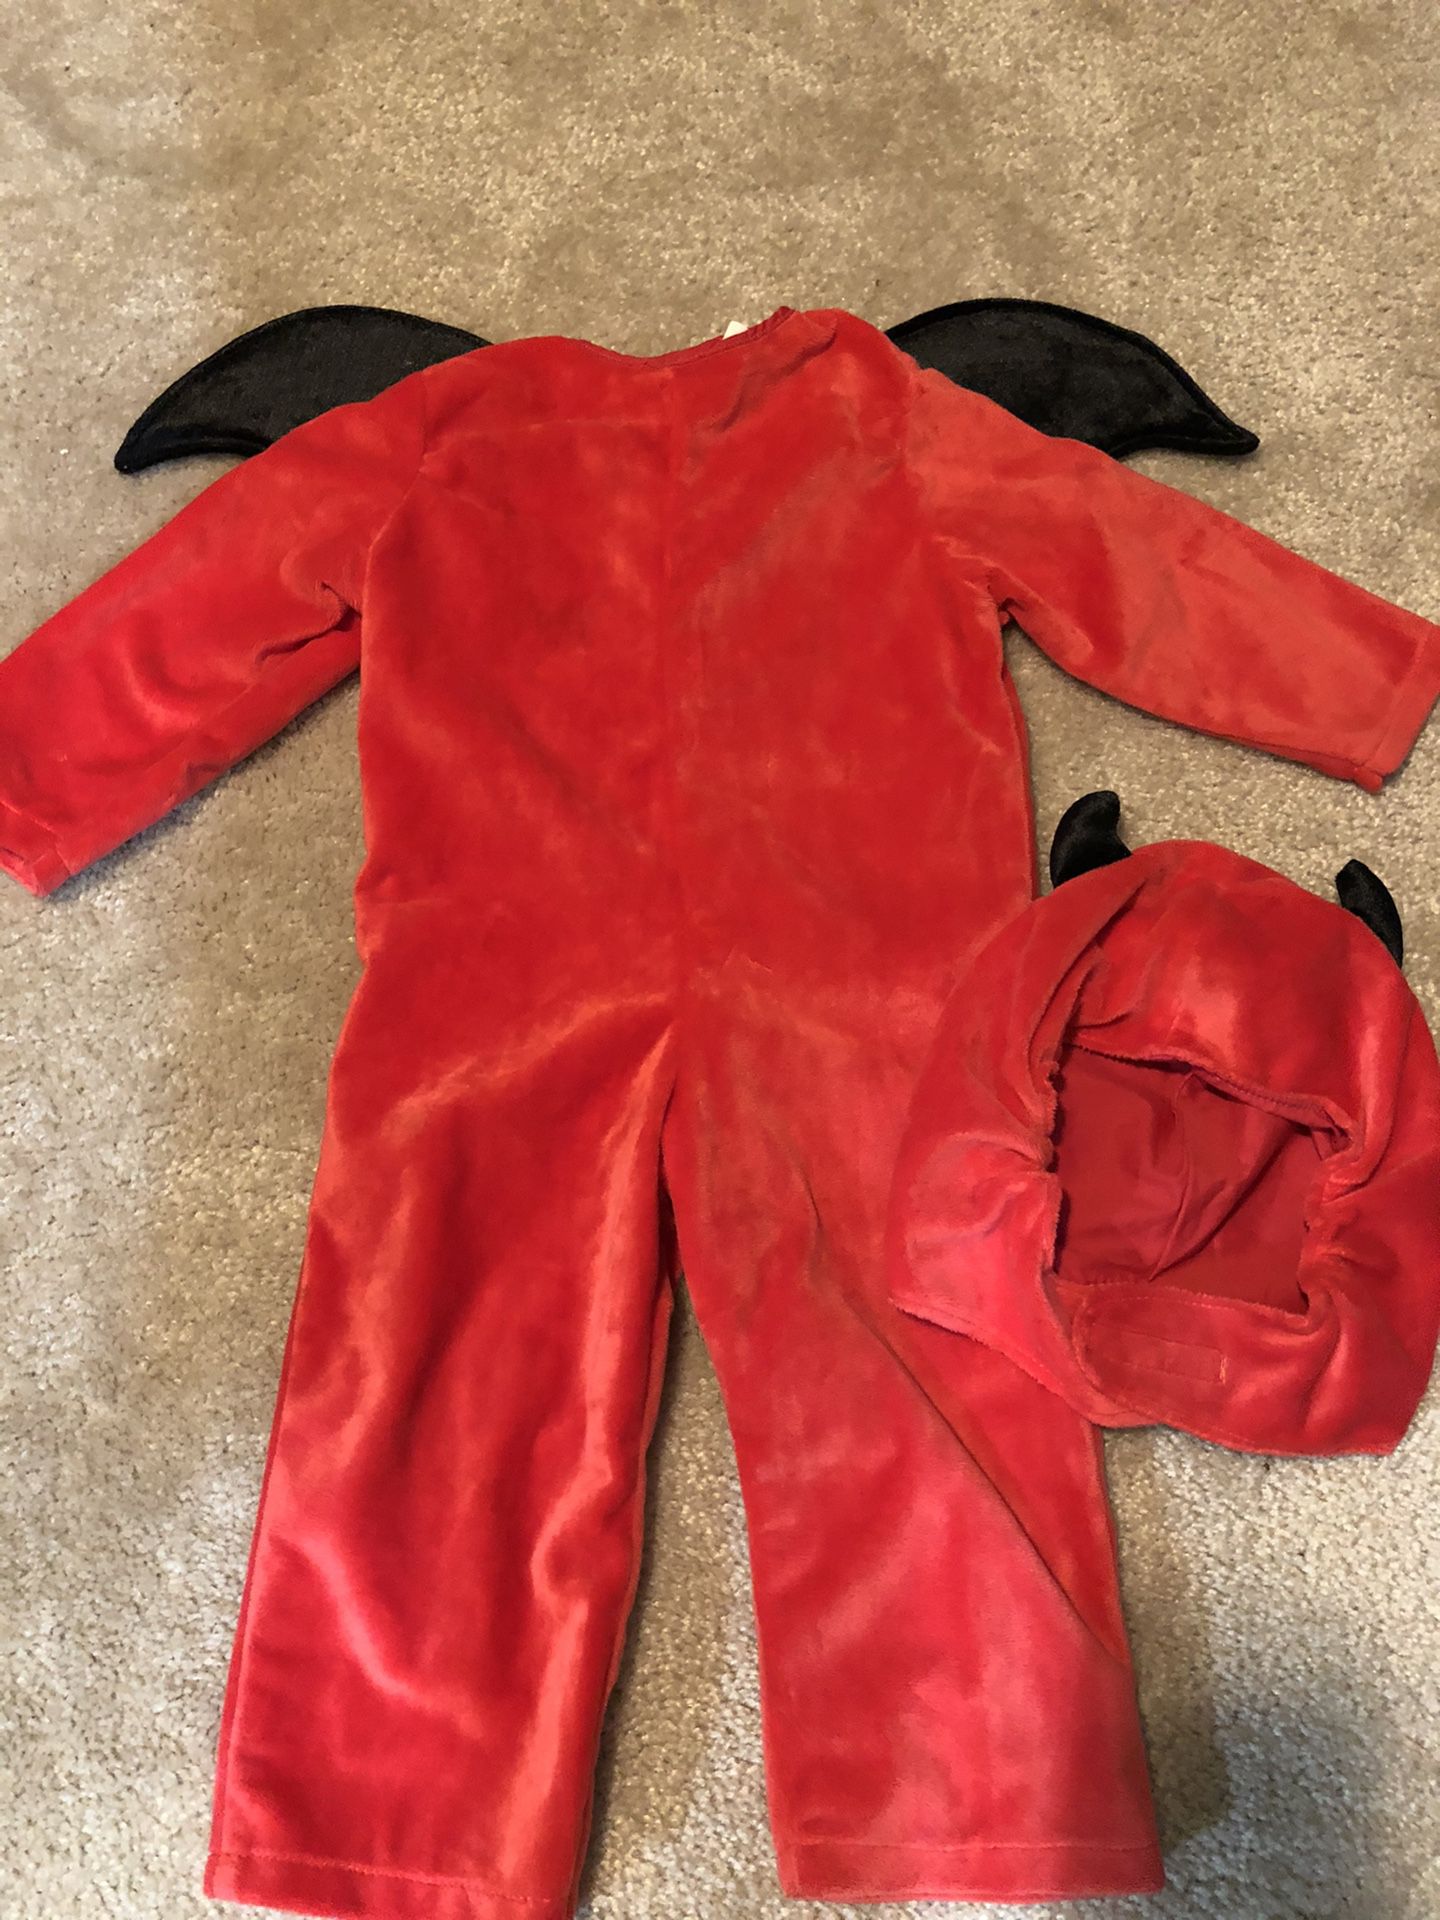 Toddler Devil Costume